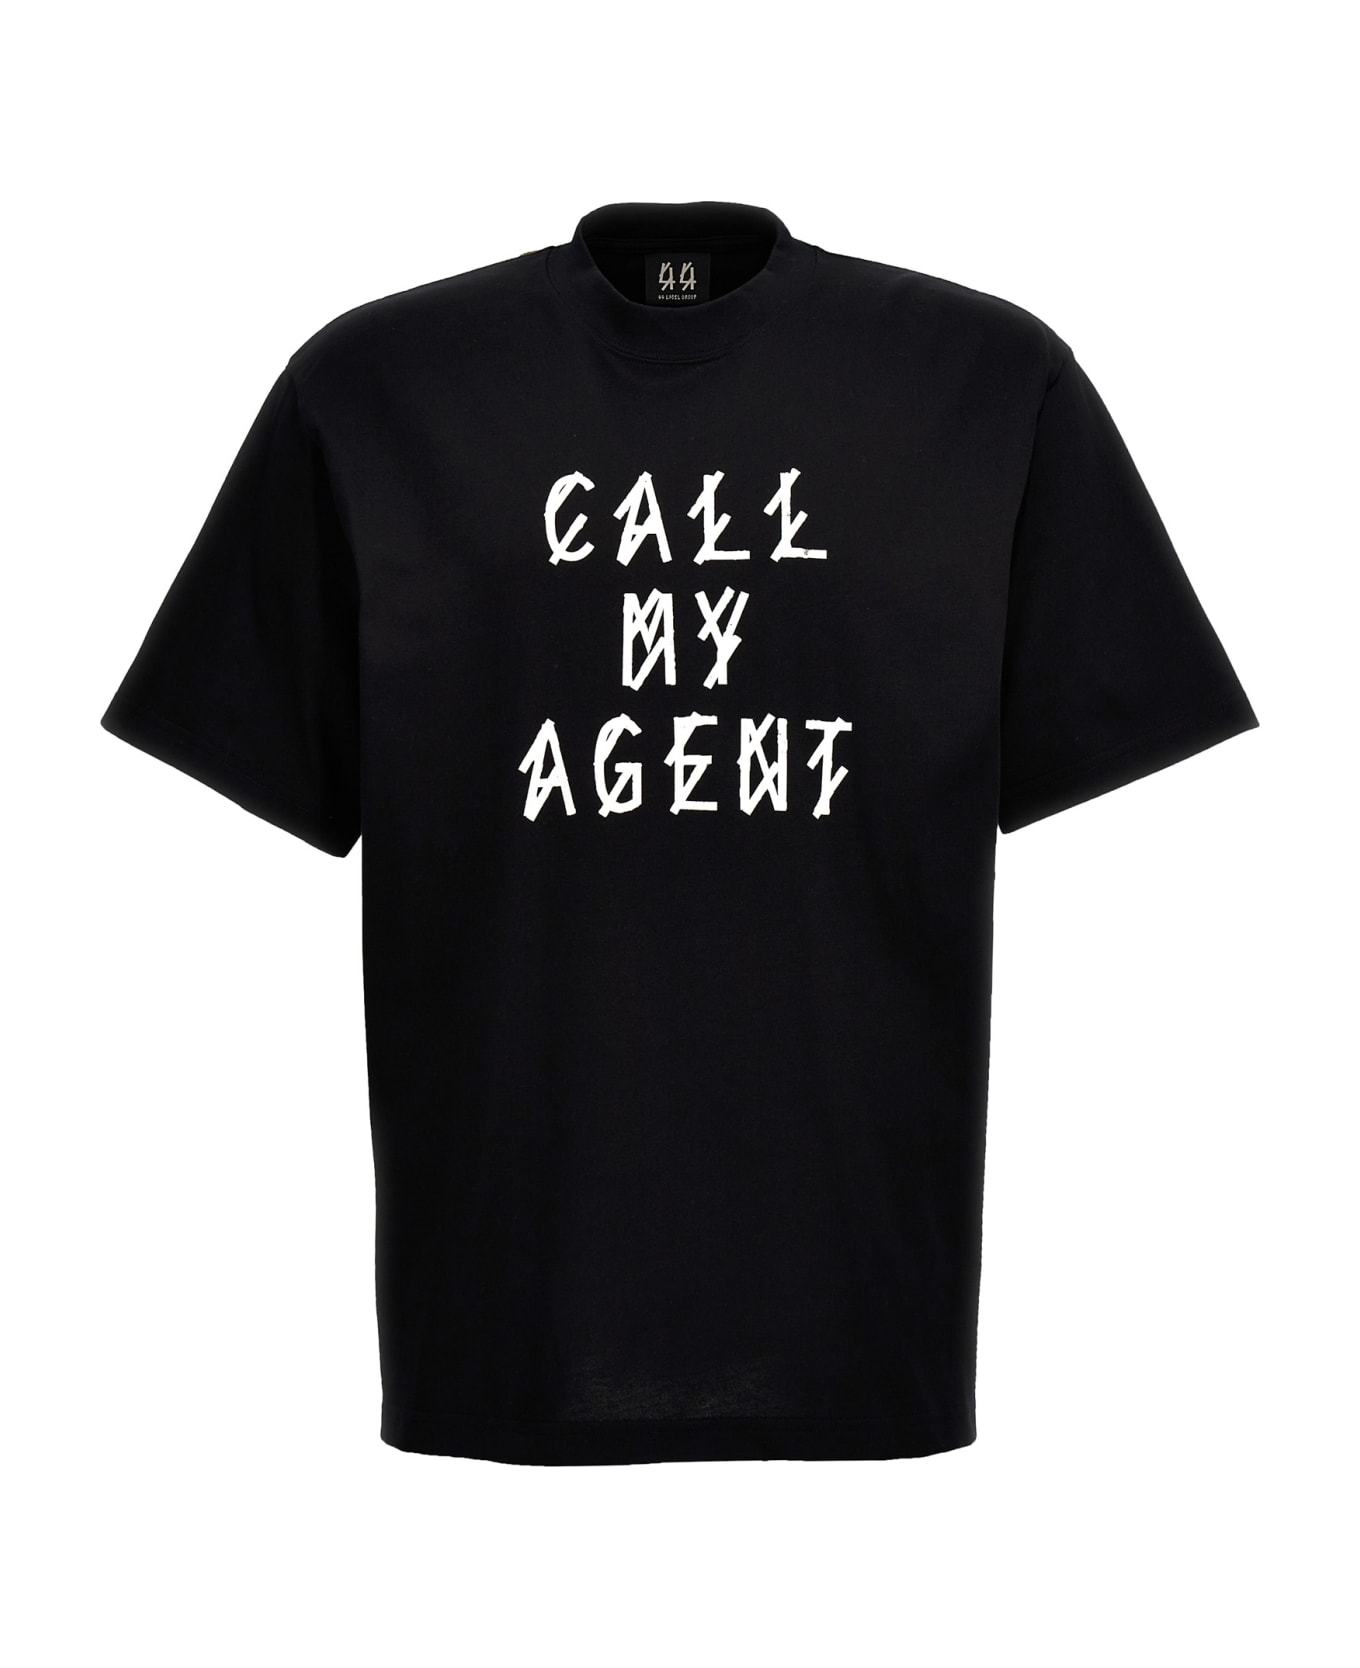 44 Label Group 'agent' T-shirt - Black   シャツ